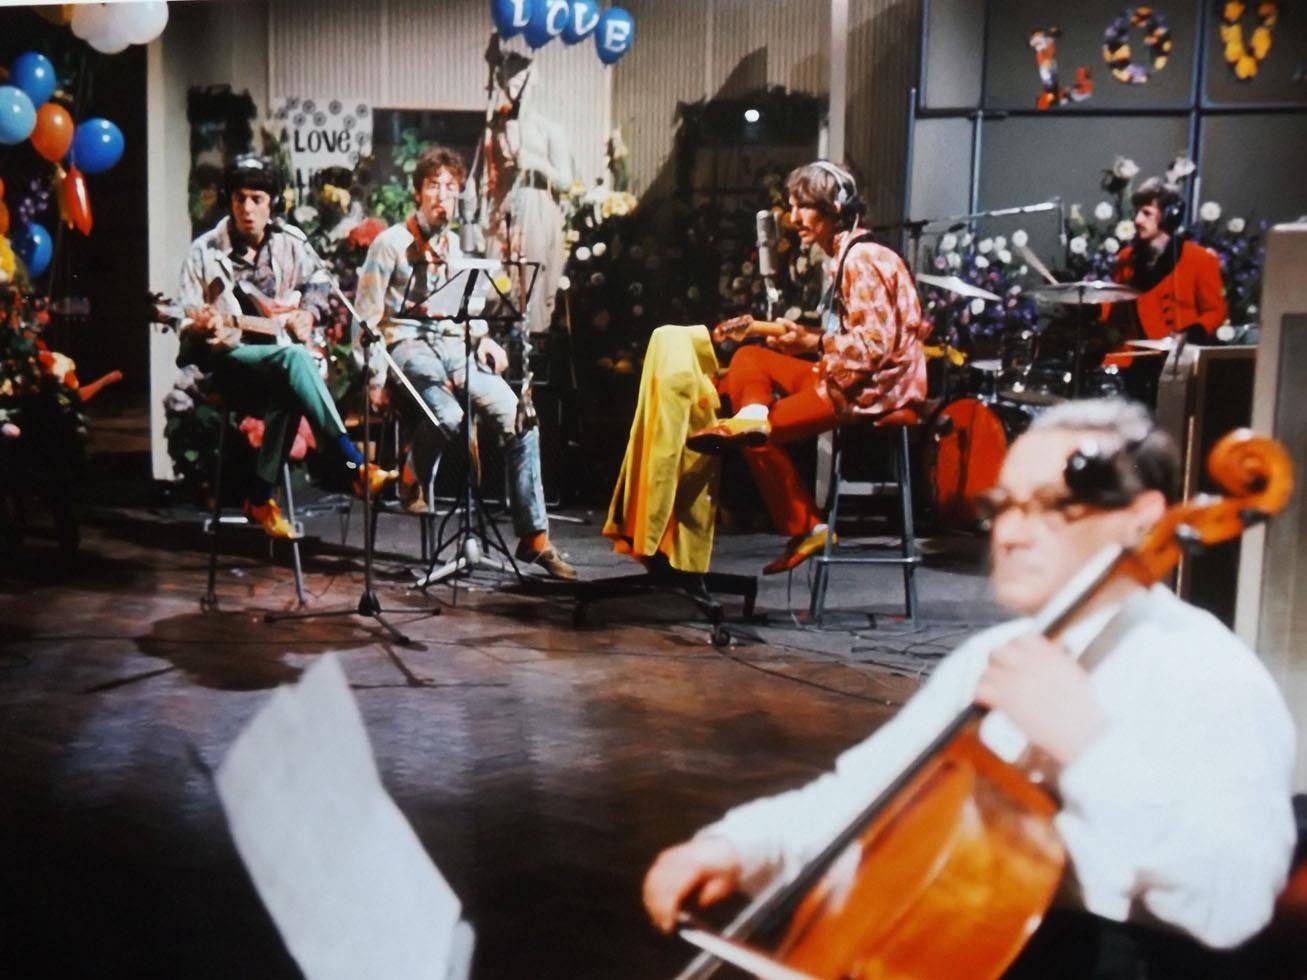 David Mangus Portrait Photograph - The Beatles and Cello Player, London, 1967